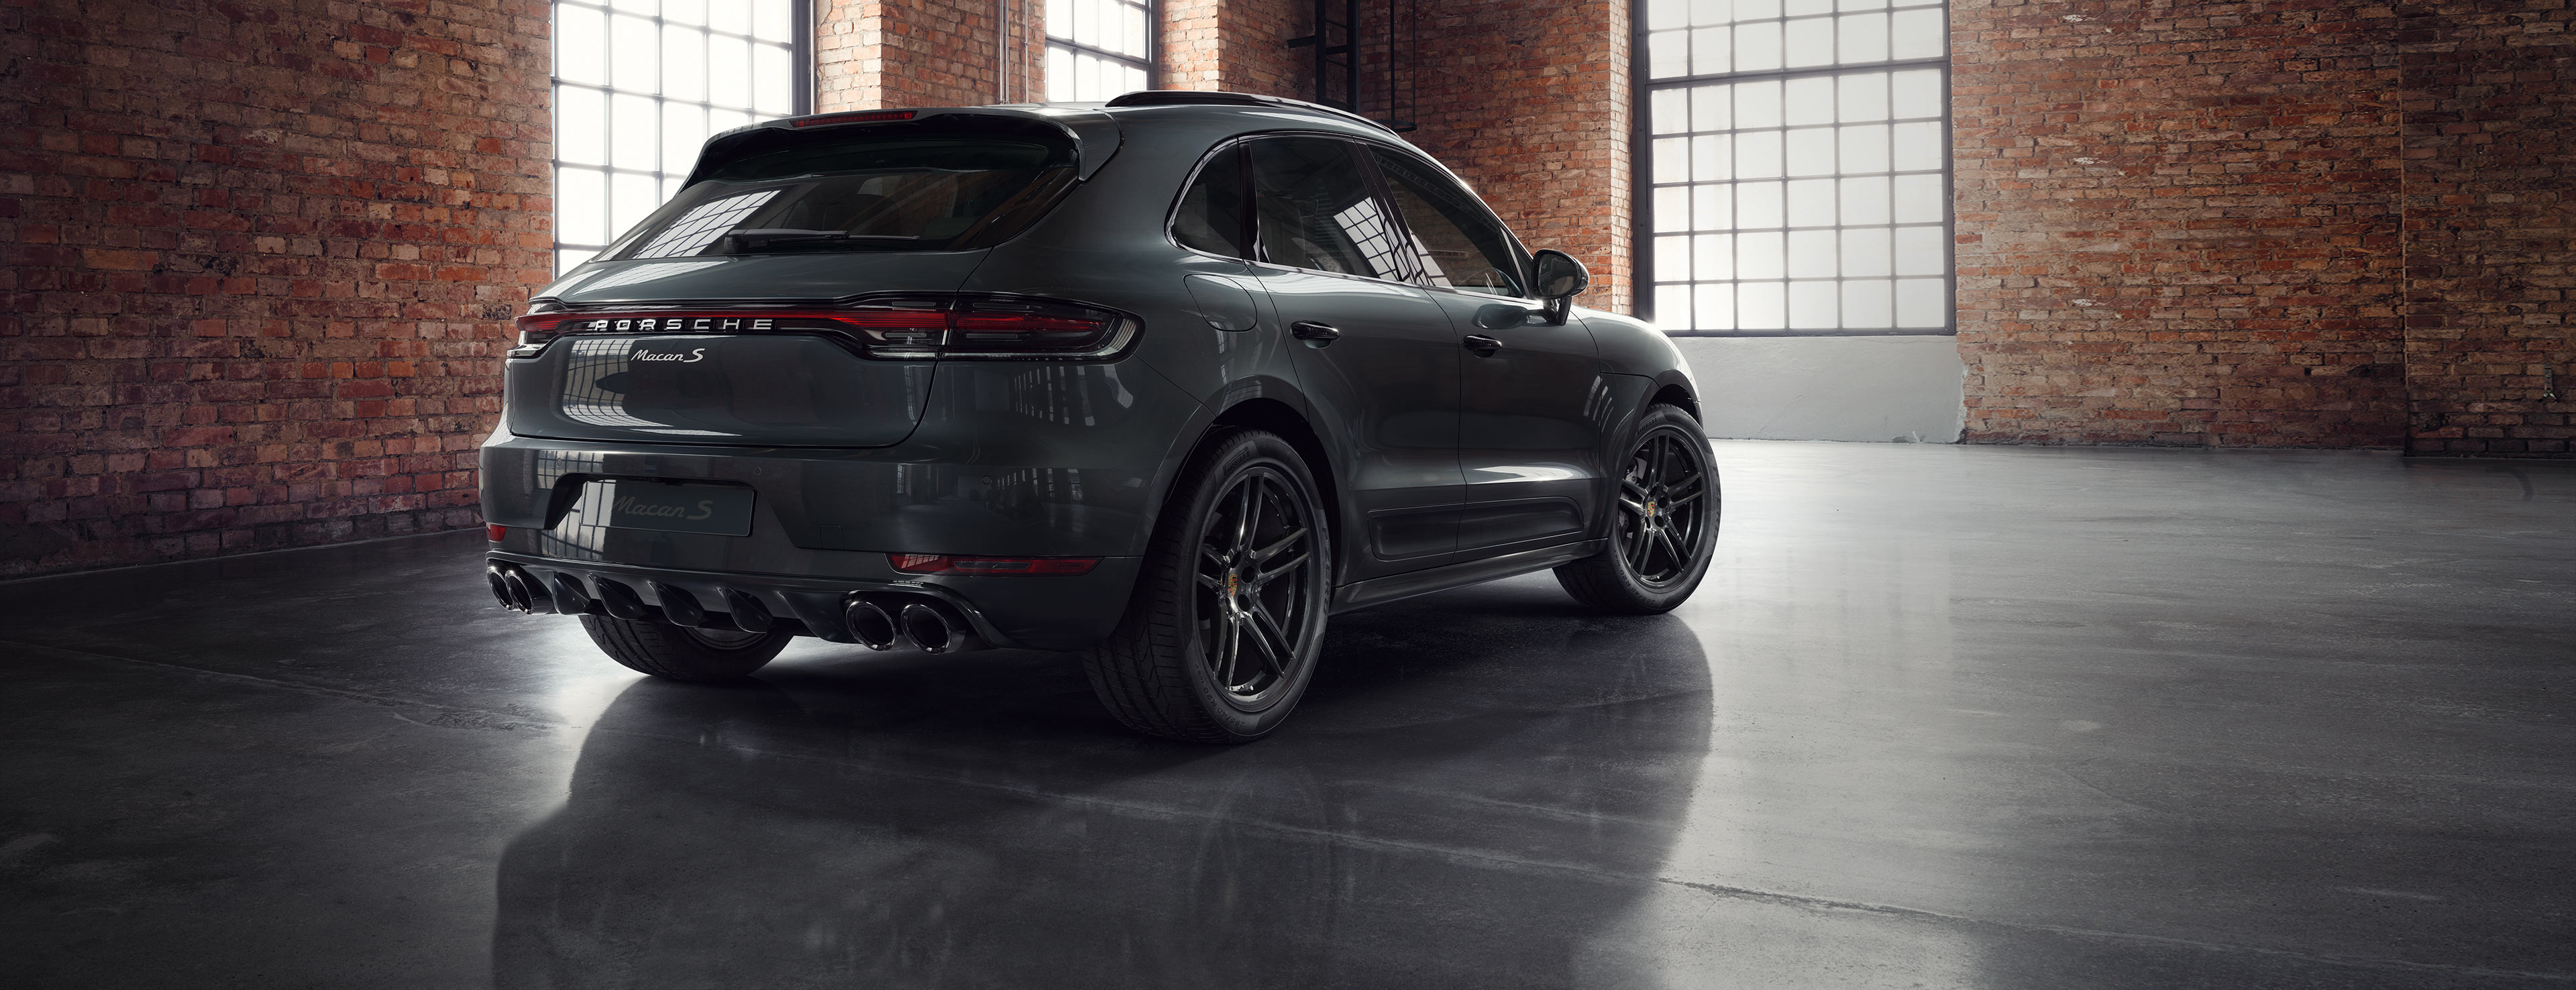 Porsche Macan, Exclusive edition, High-performance crossover, German craftsmanship, 3840x1480 Dual Screen Desktop